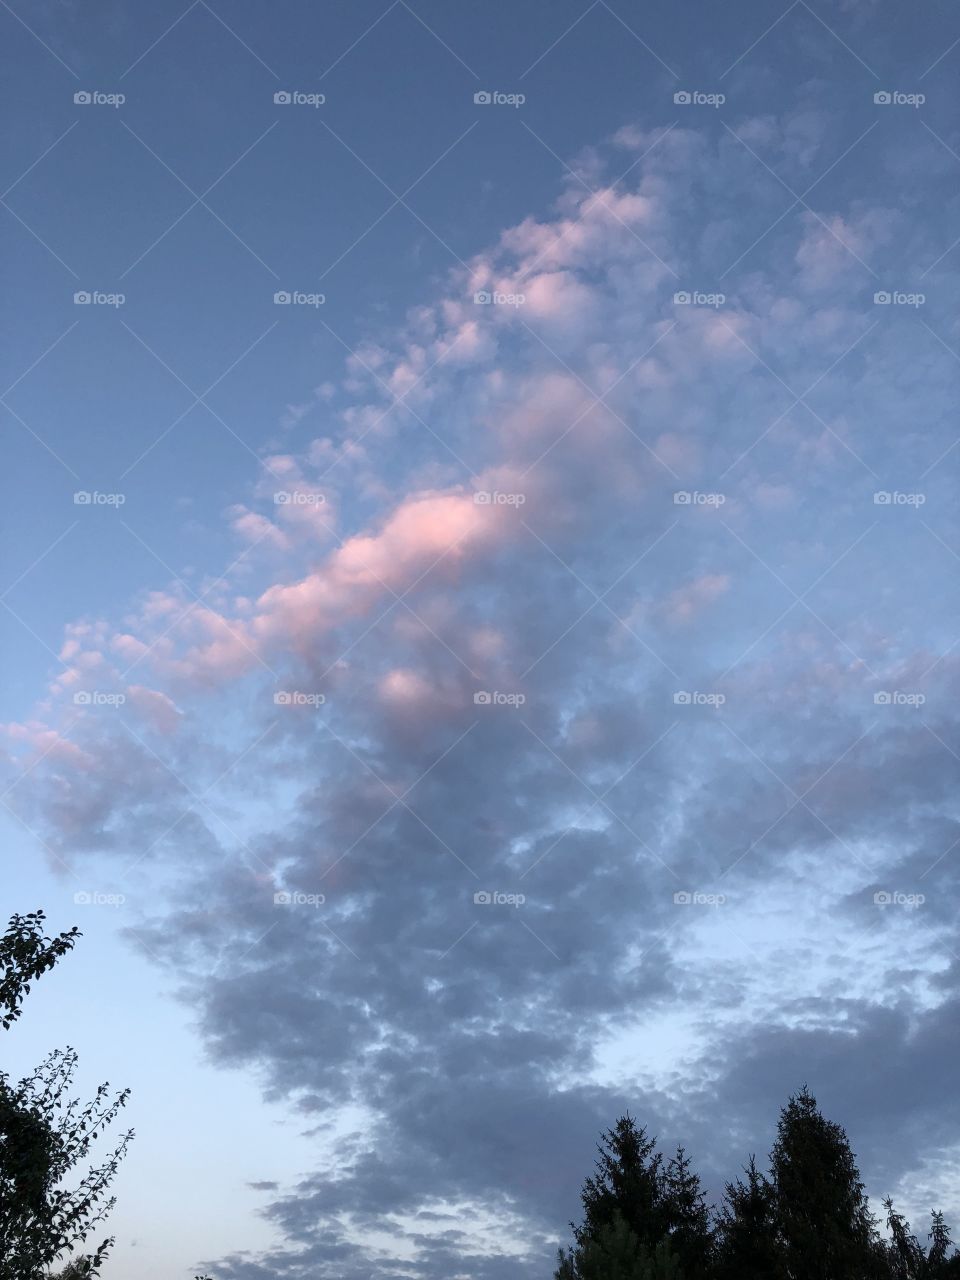 Evening clouds 